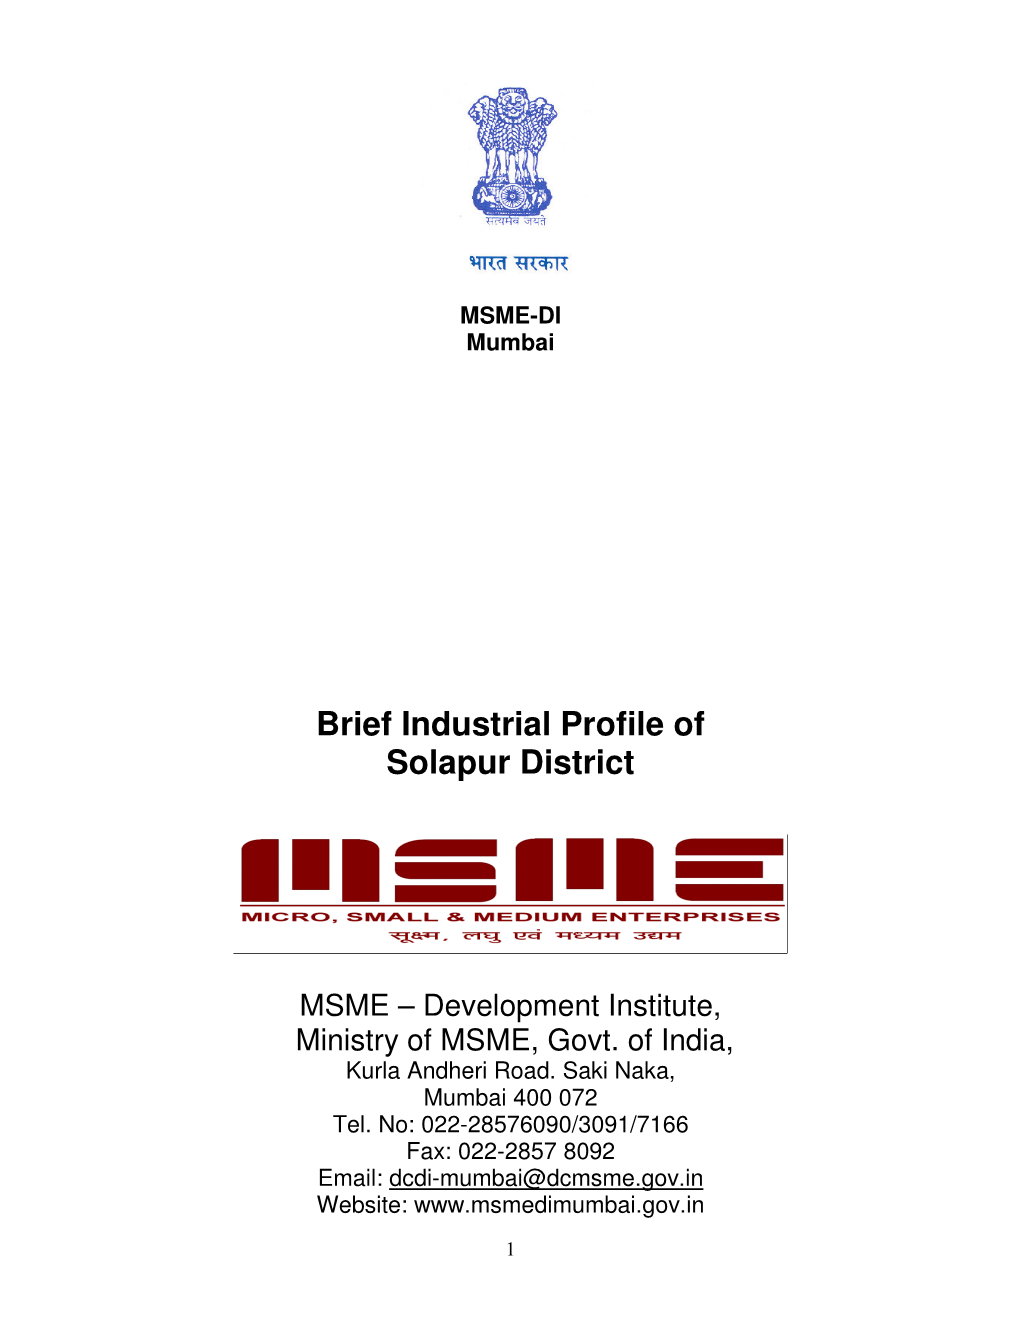 Brief Industrial Profile of Solapur District